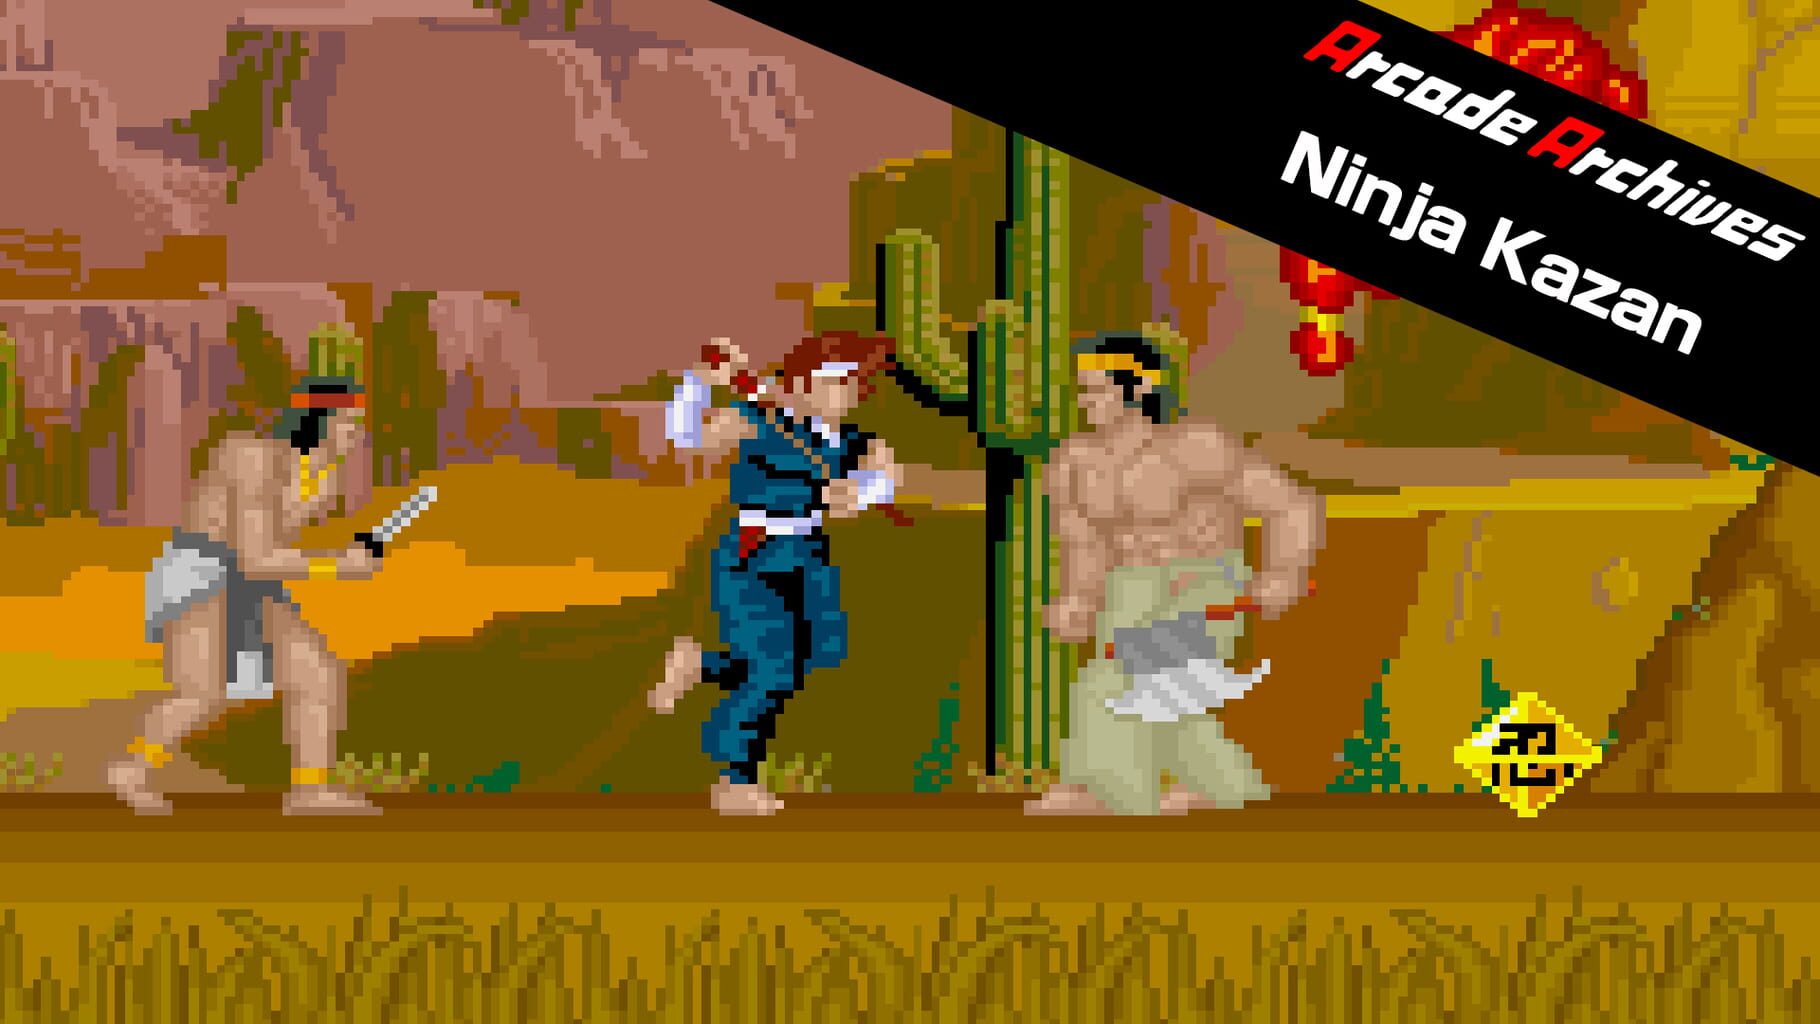 Arcade Archives: Ninja Kazan artwork